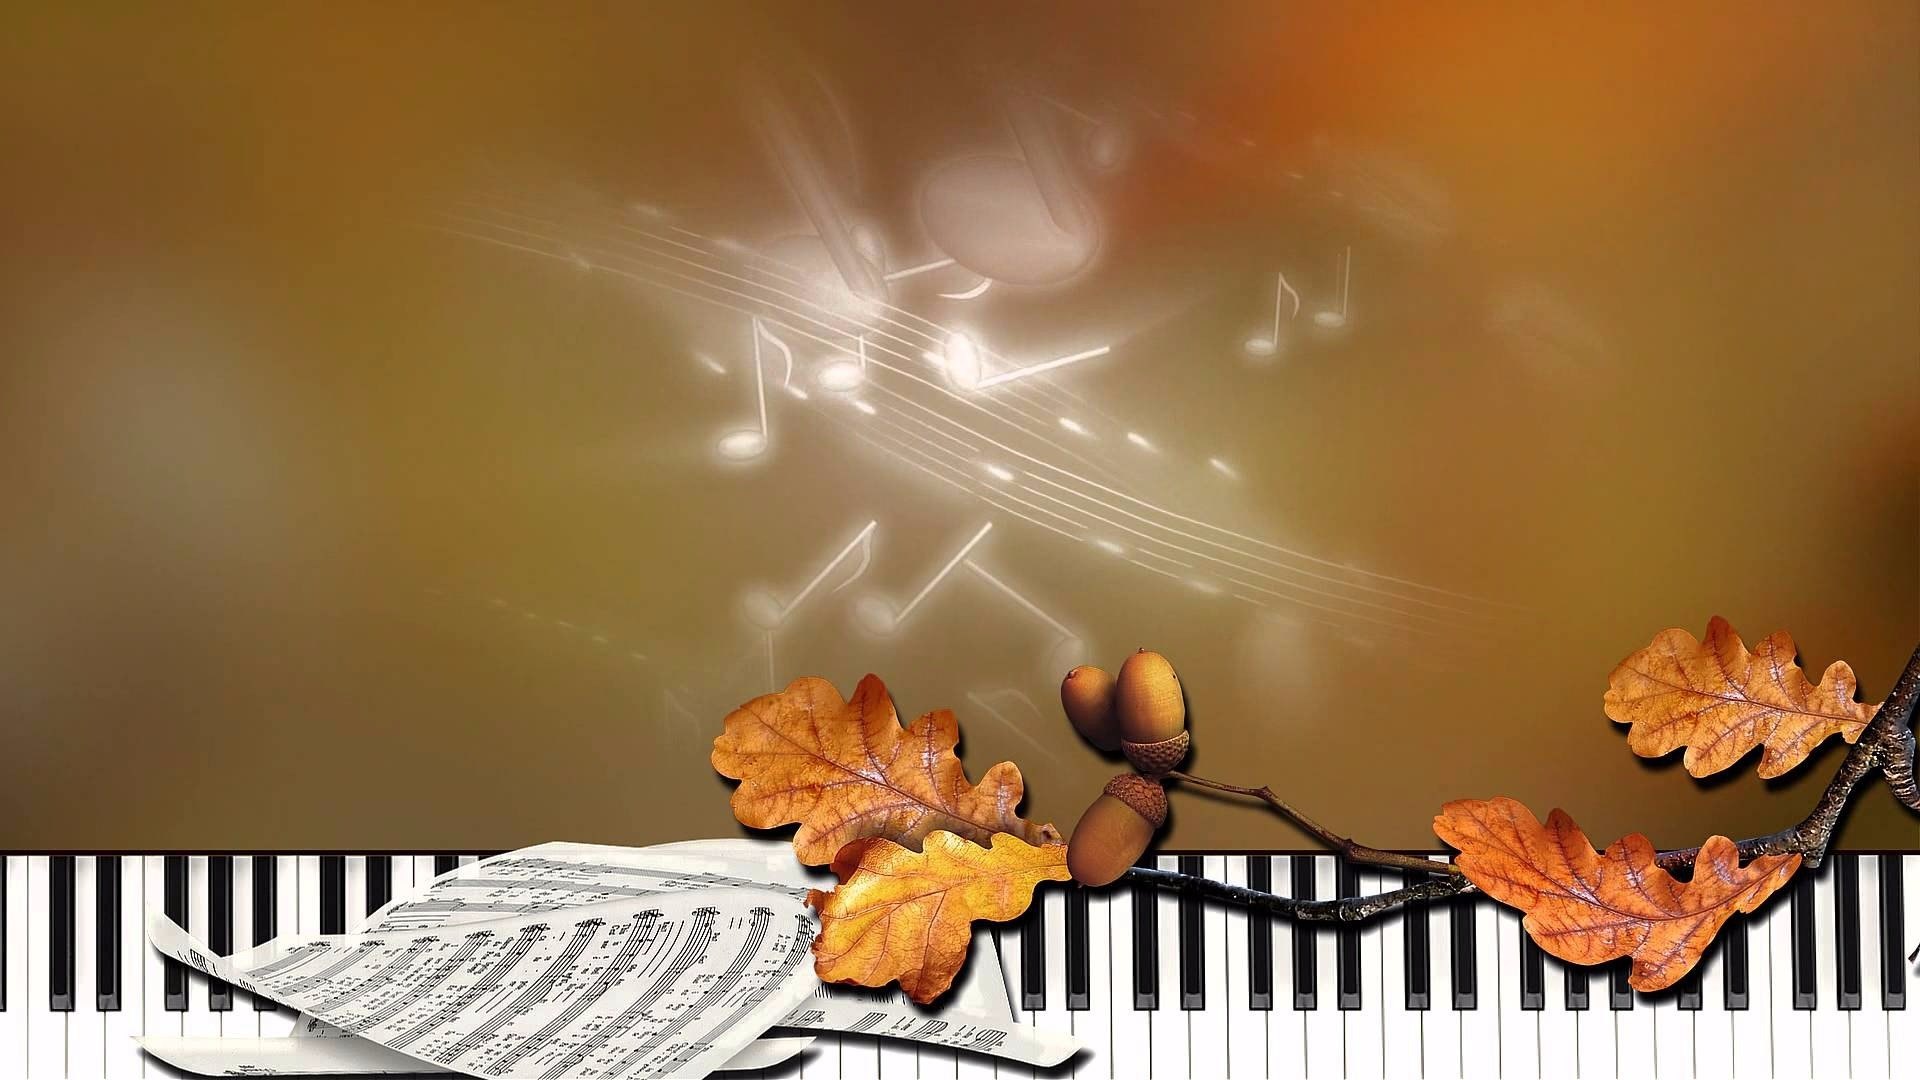 Я осени пою. Осенний музыкальный фон. Музыкальная осень фон. Осенний фон с нотами. Осень музыка фон для афиши.